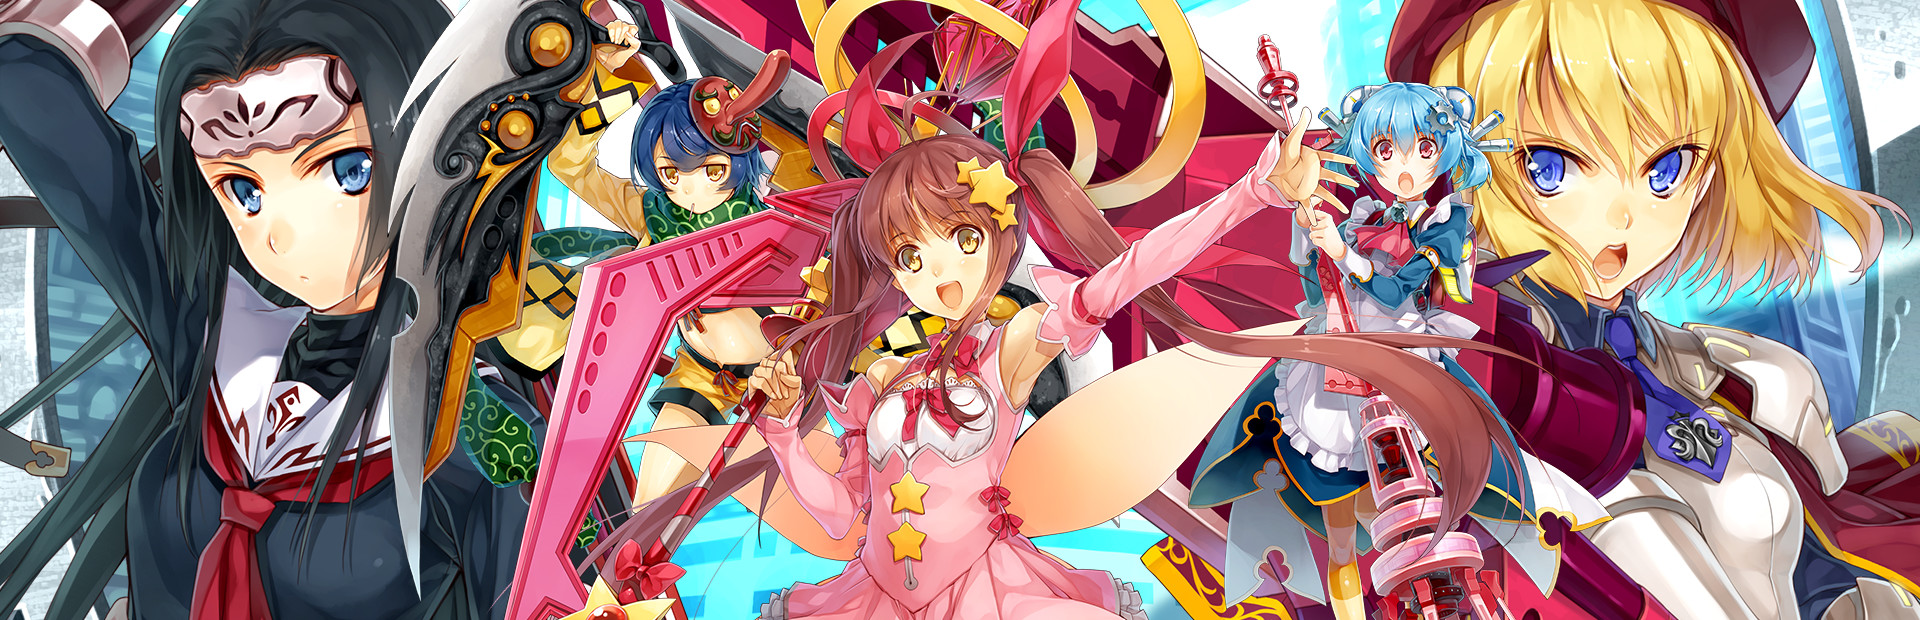 Magical Battle Festa cover image